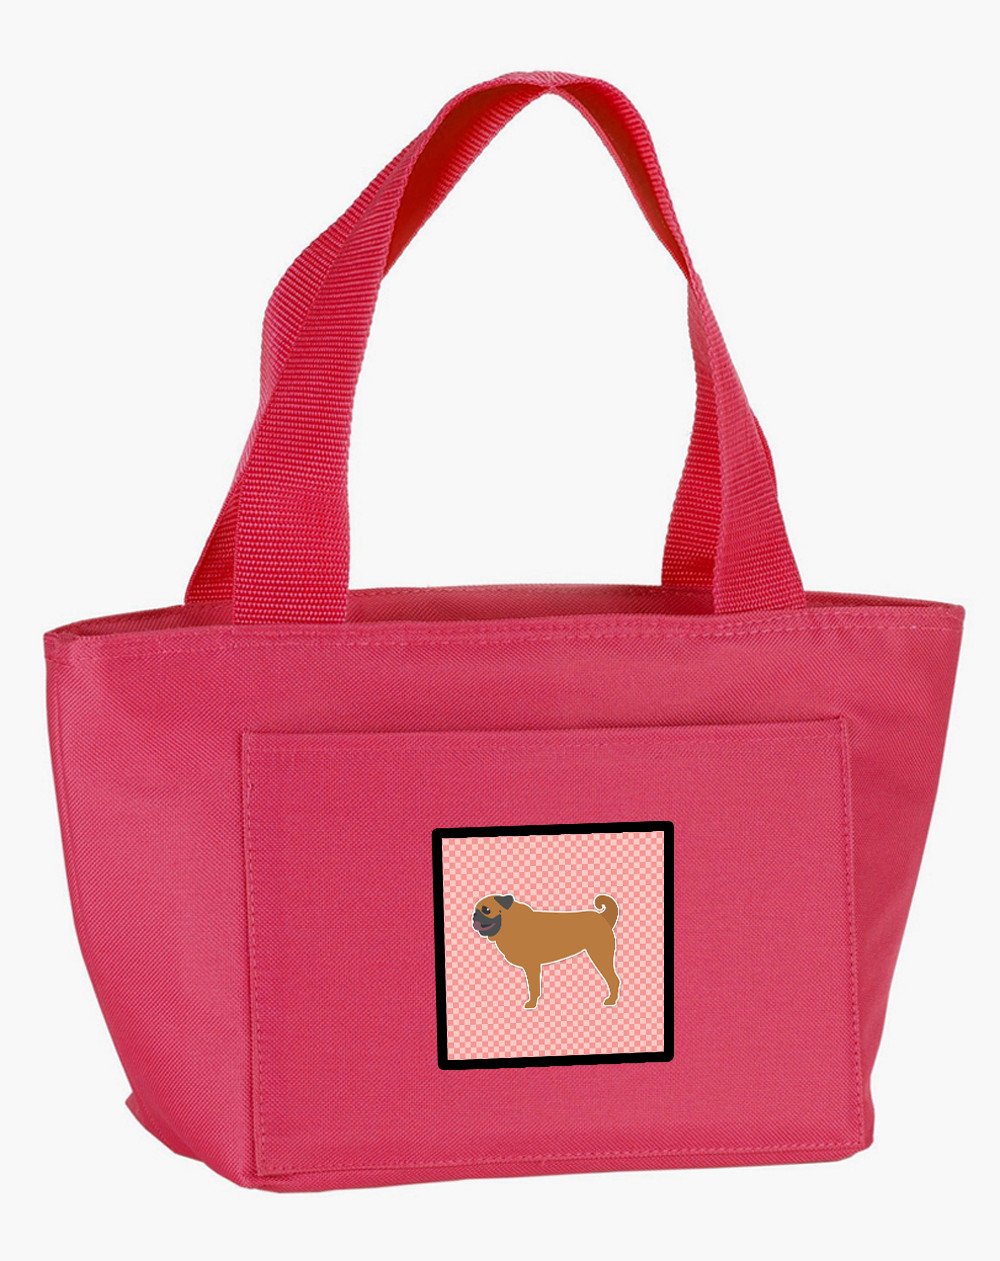 Pug Checkerboard Pink Lunch Bag BB3647PK-8808 by Caroline's Treasures